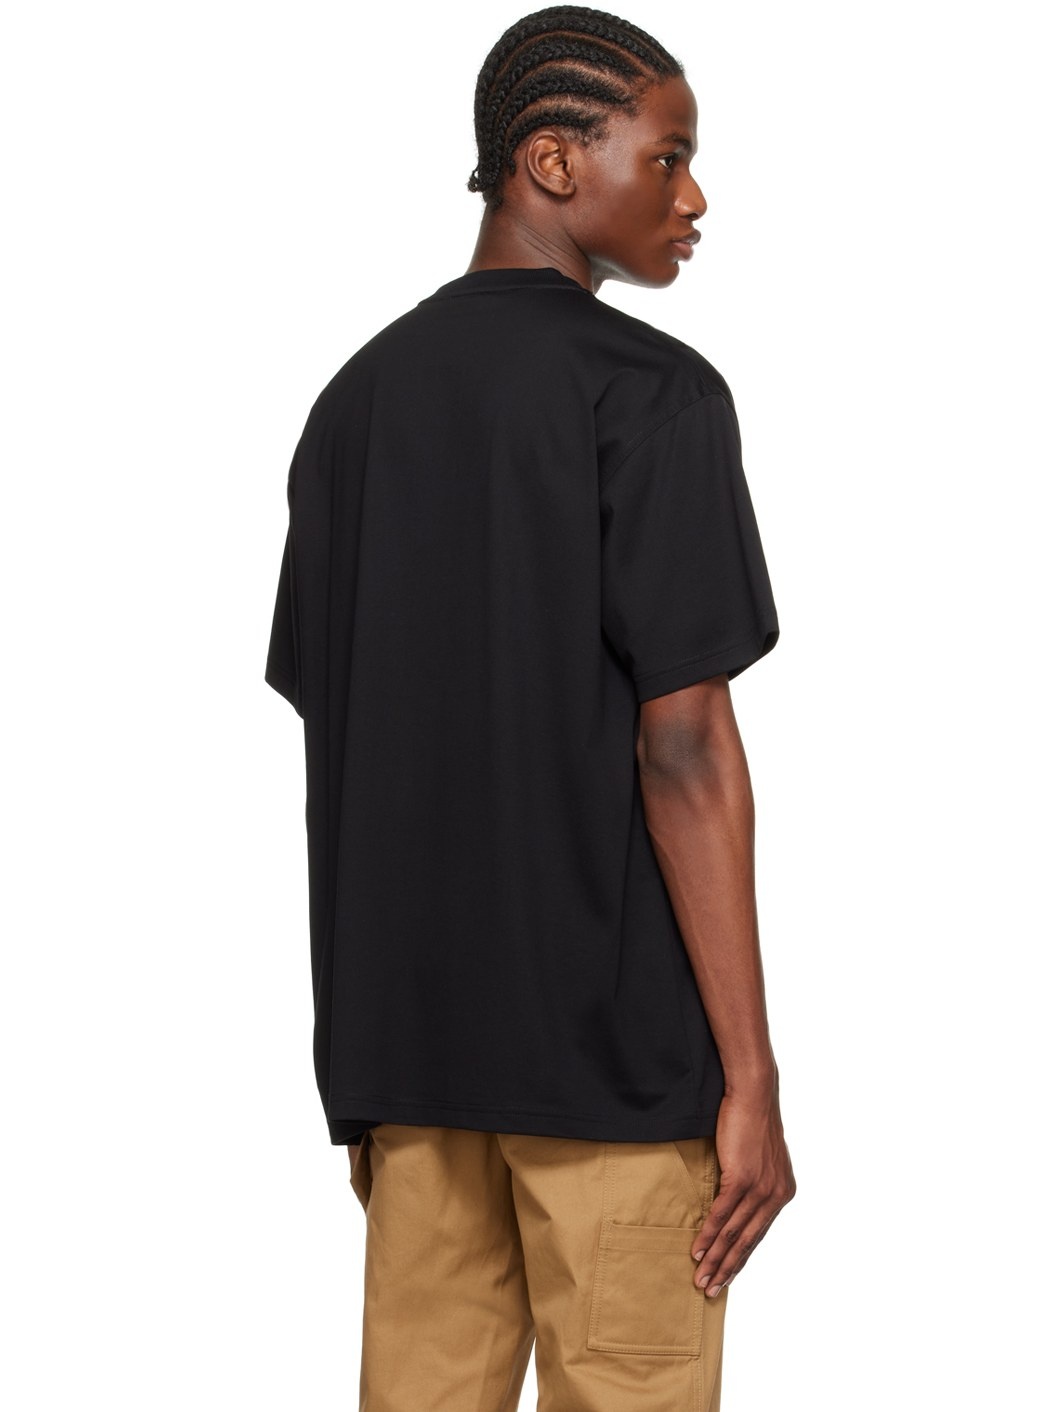 Black Bonded T-Shirt - 3